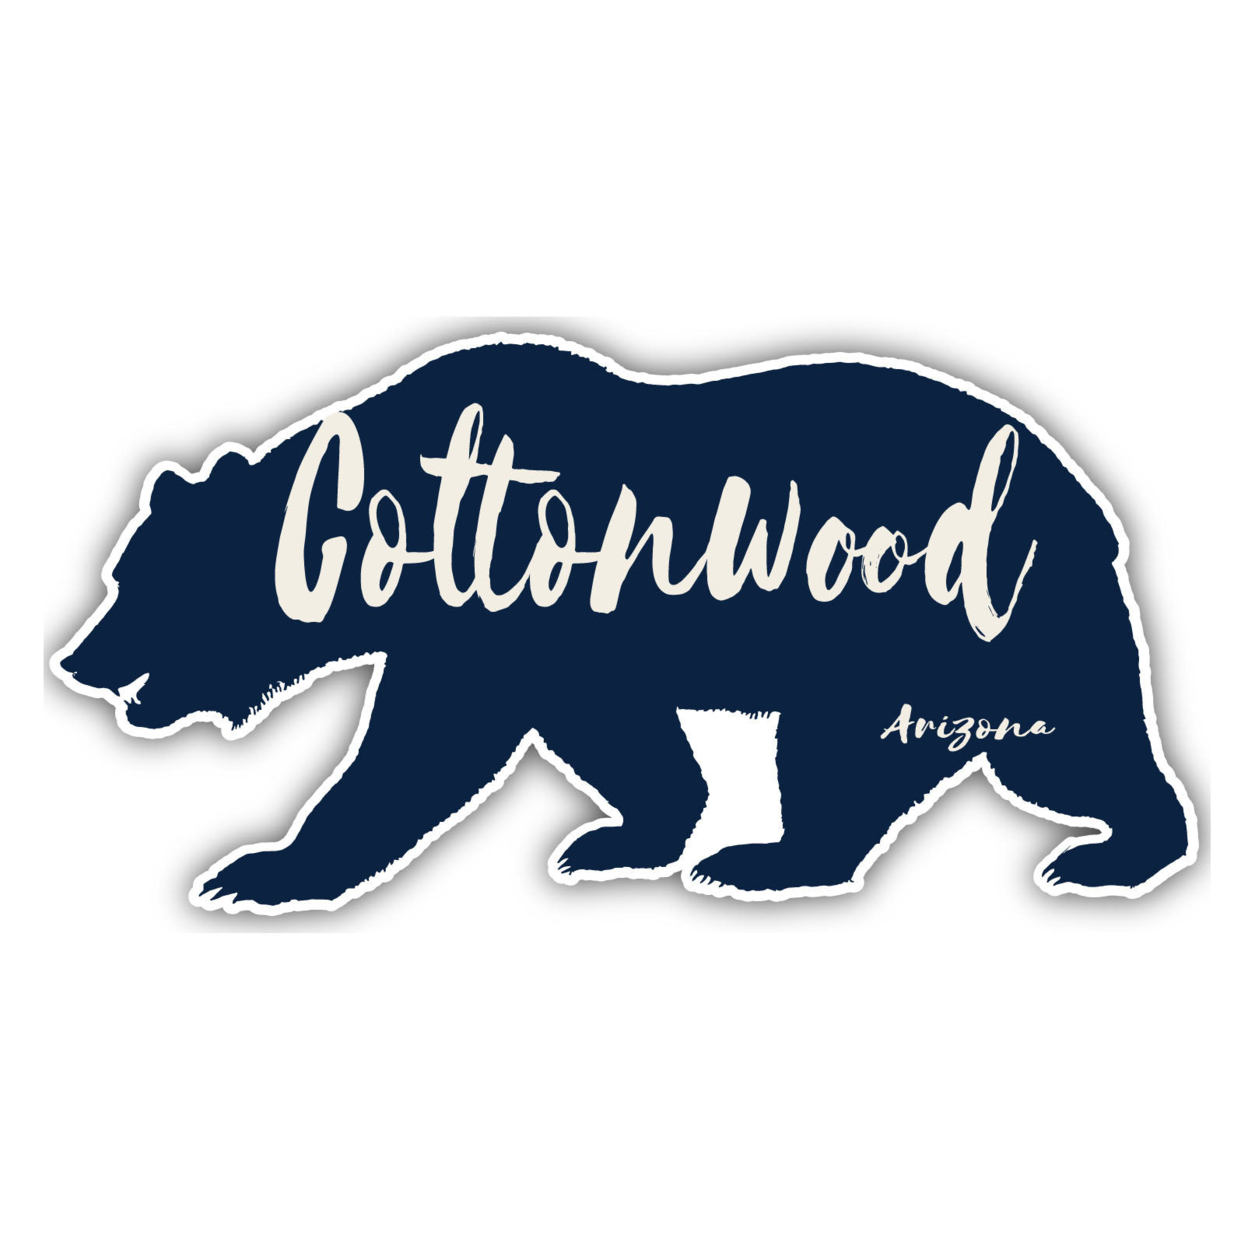 Cottonwood Arizona Souvenir Decorative Stickers (Choose Theme And Size) - Single Unit, 2-Inch, Bear